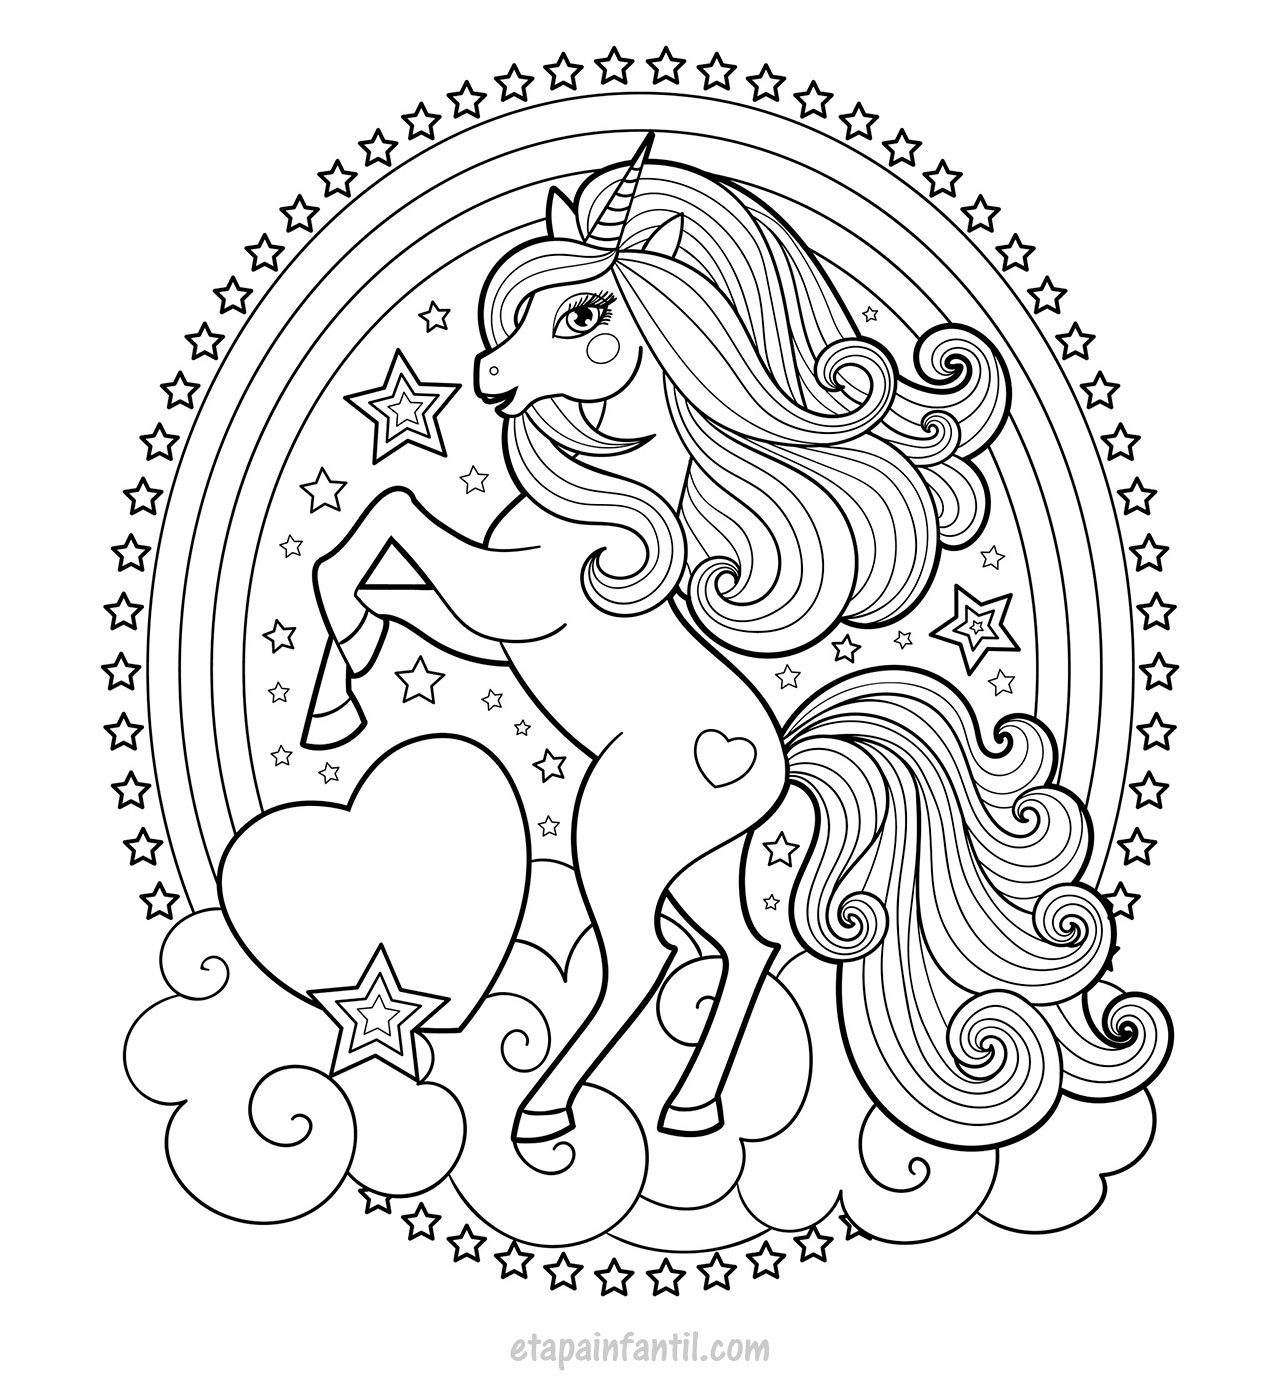 Dibujos de unicornios para colorear - Etapa Infantil